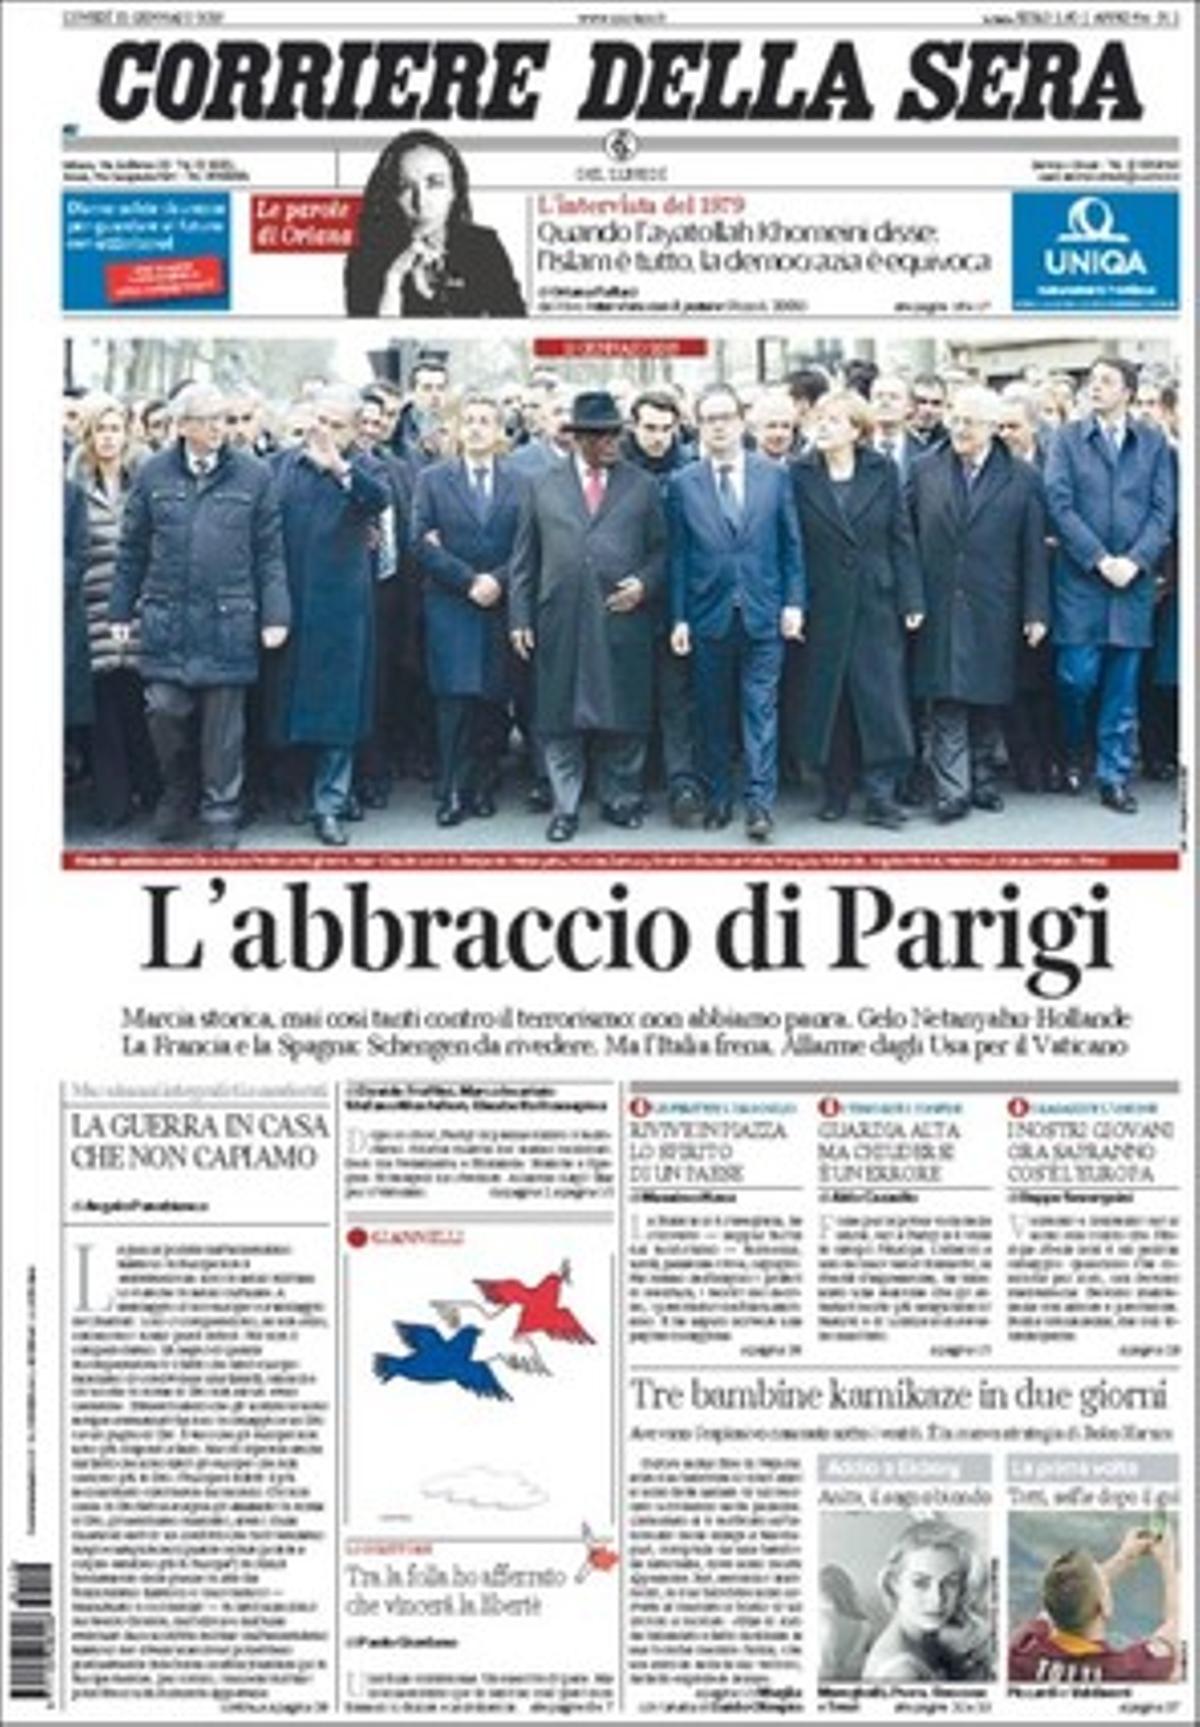 La portada de l’italià ’Corriere della Sera’.